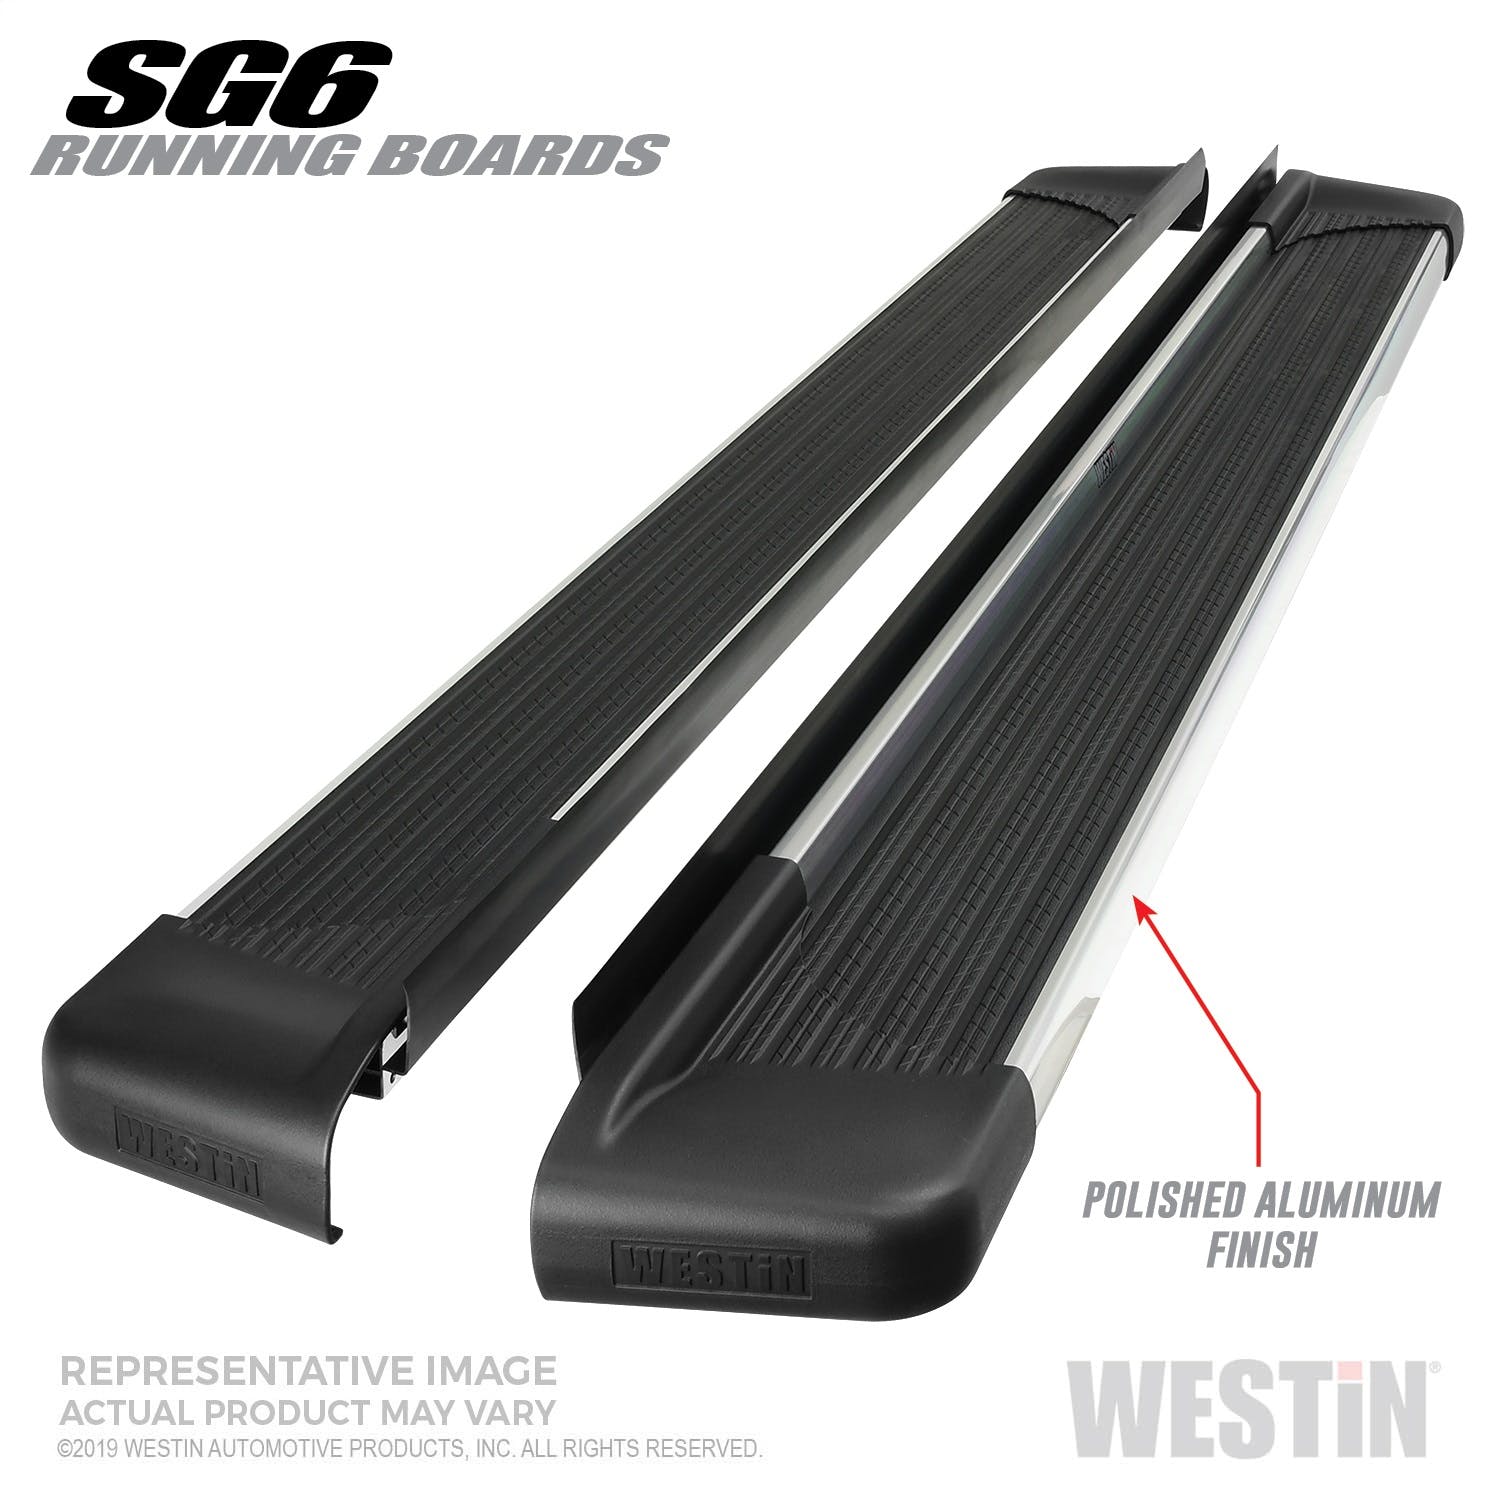 Westin Automotive 27-64710 SG6 Running Boards Polished